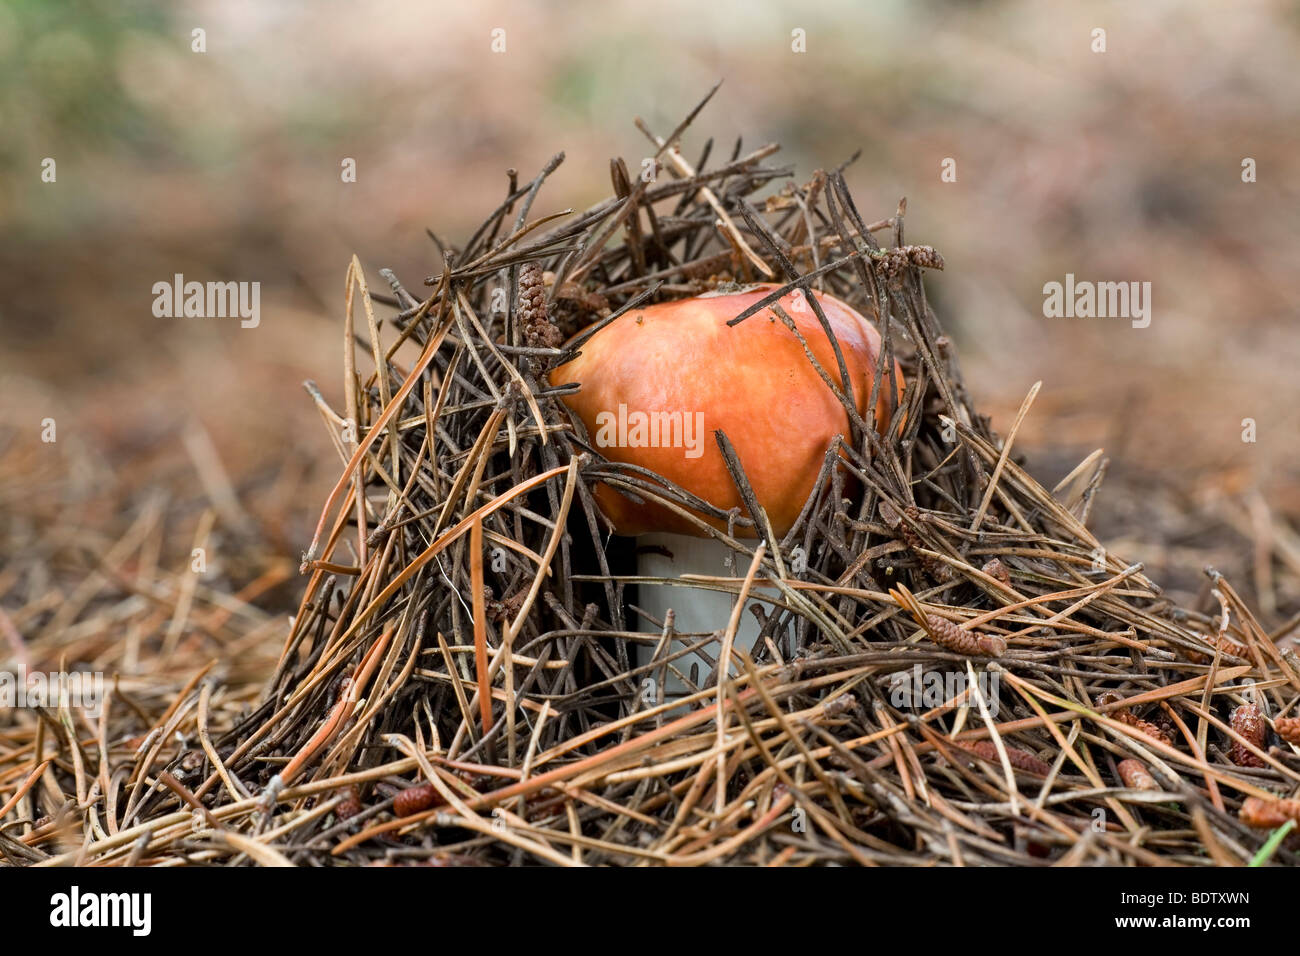 Orangeroter Graustieltaeubling / rot-capped ubling / ubling Decolorans Stockfoto